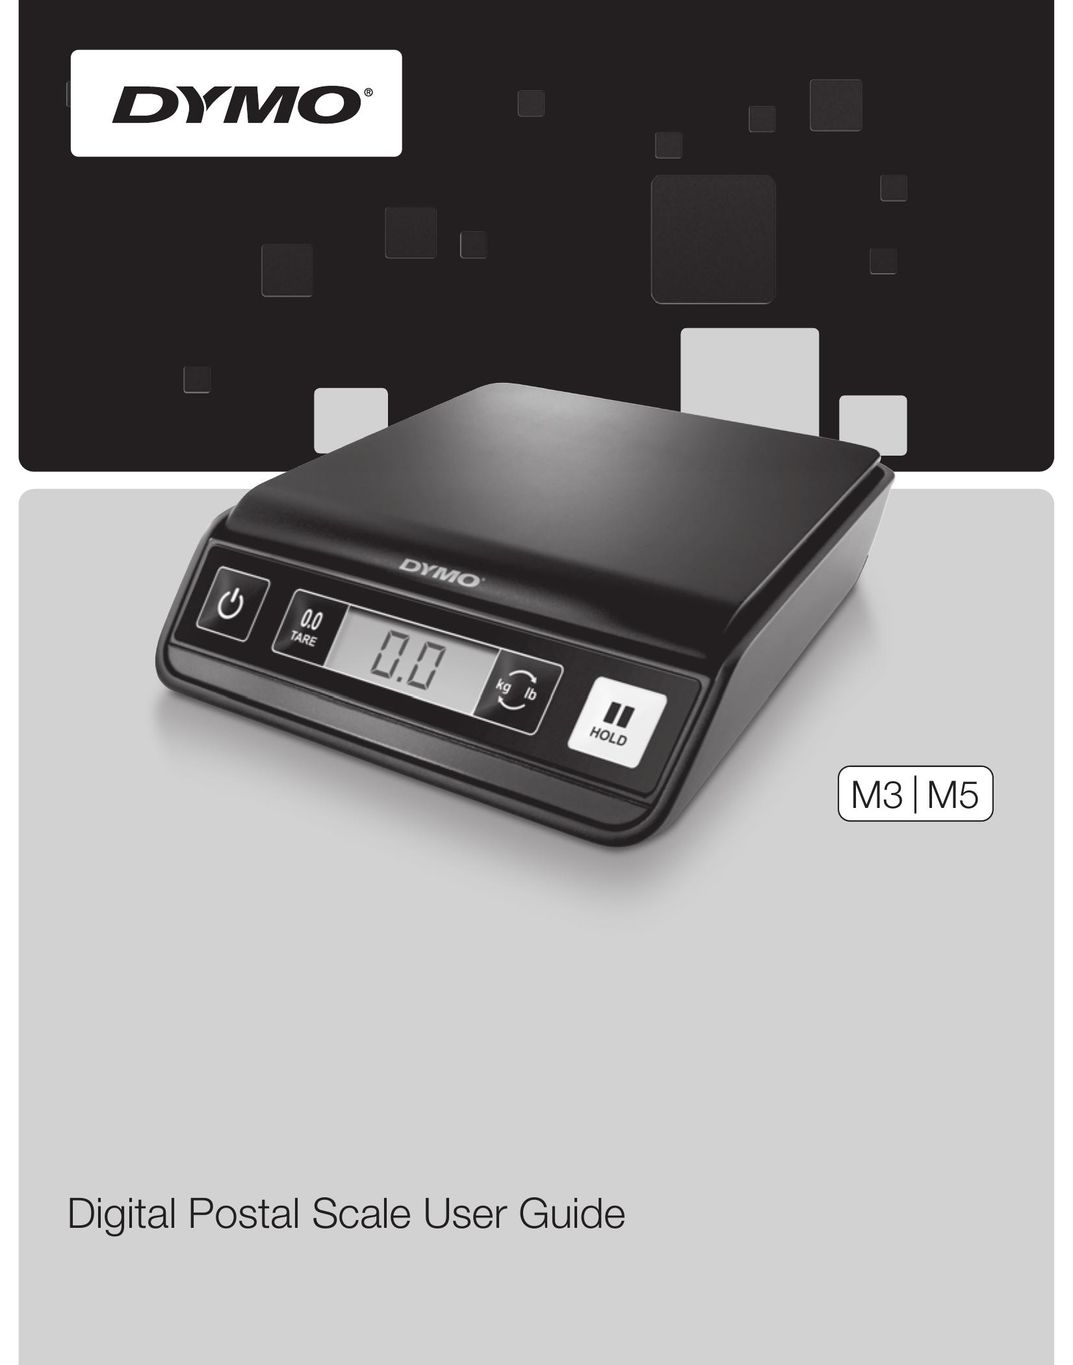 Dymo M3 Postal Equipment User Manual